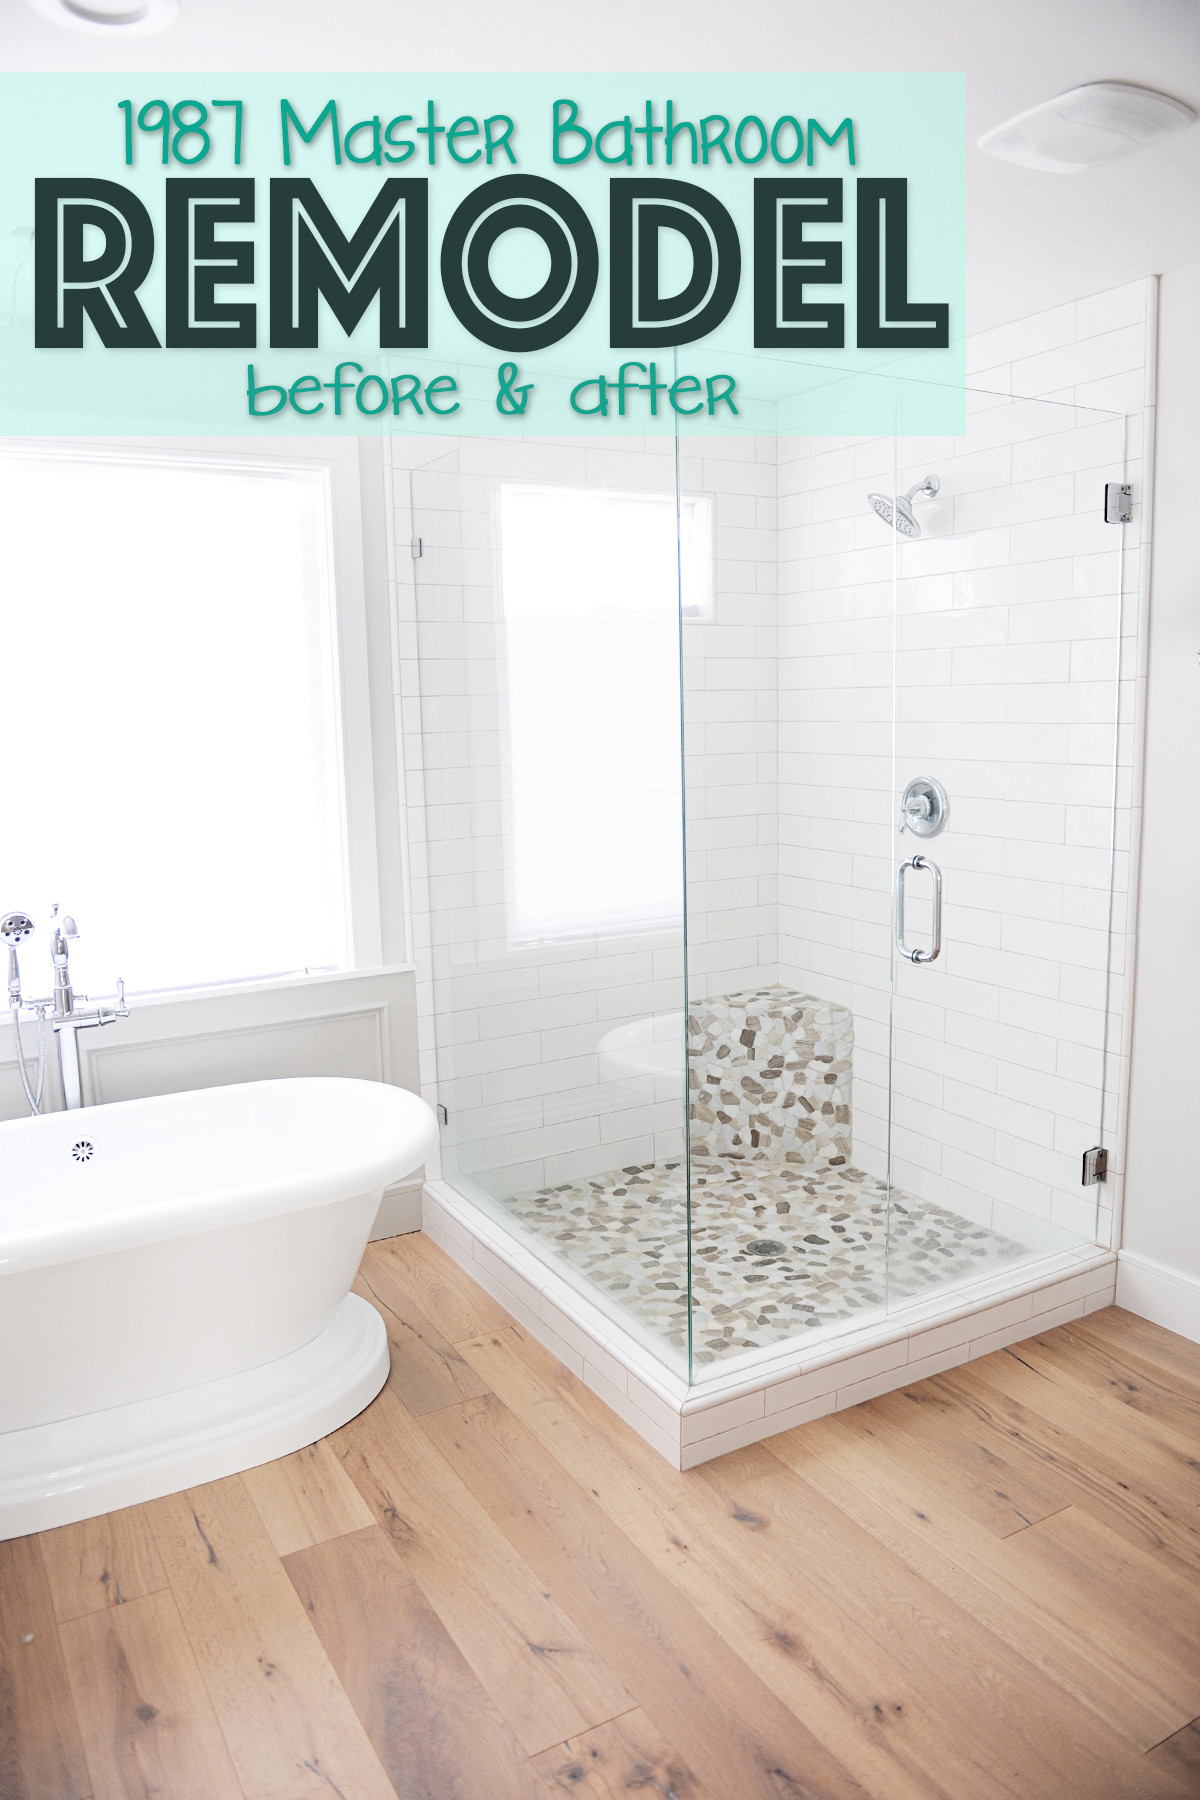 Remodeling Master Bathroom Ideas
 Master Bathroom Remodel & Renovation Idea Before and After